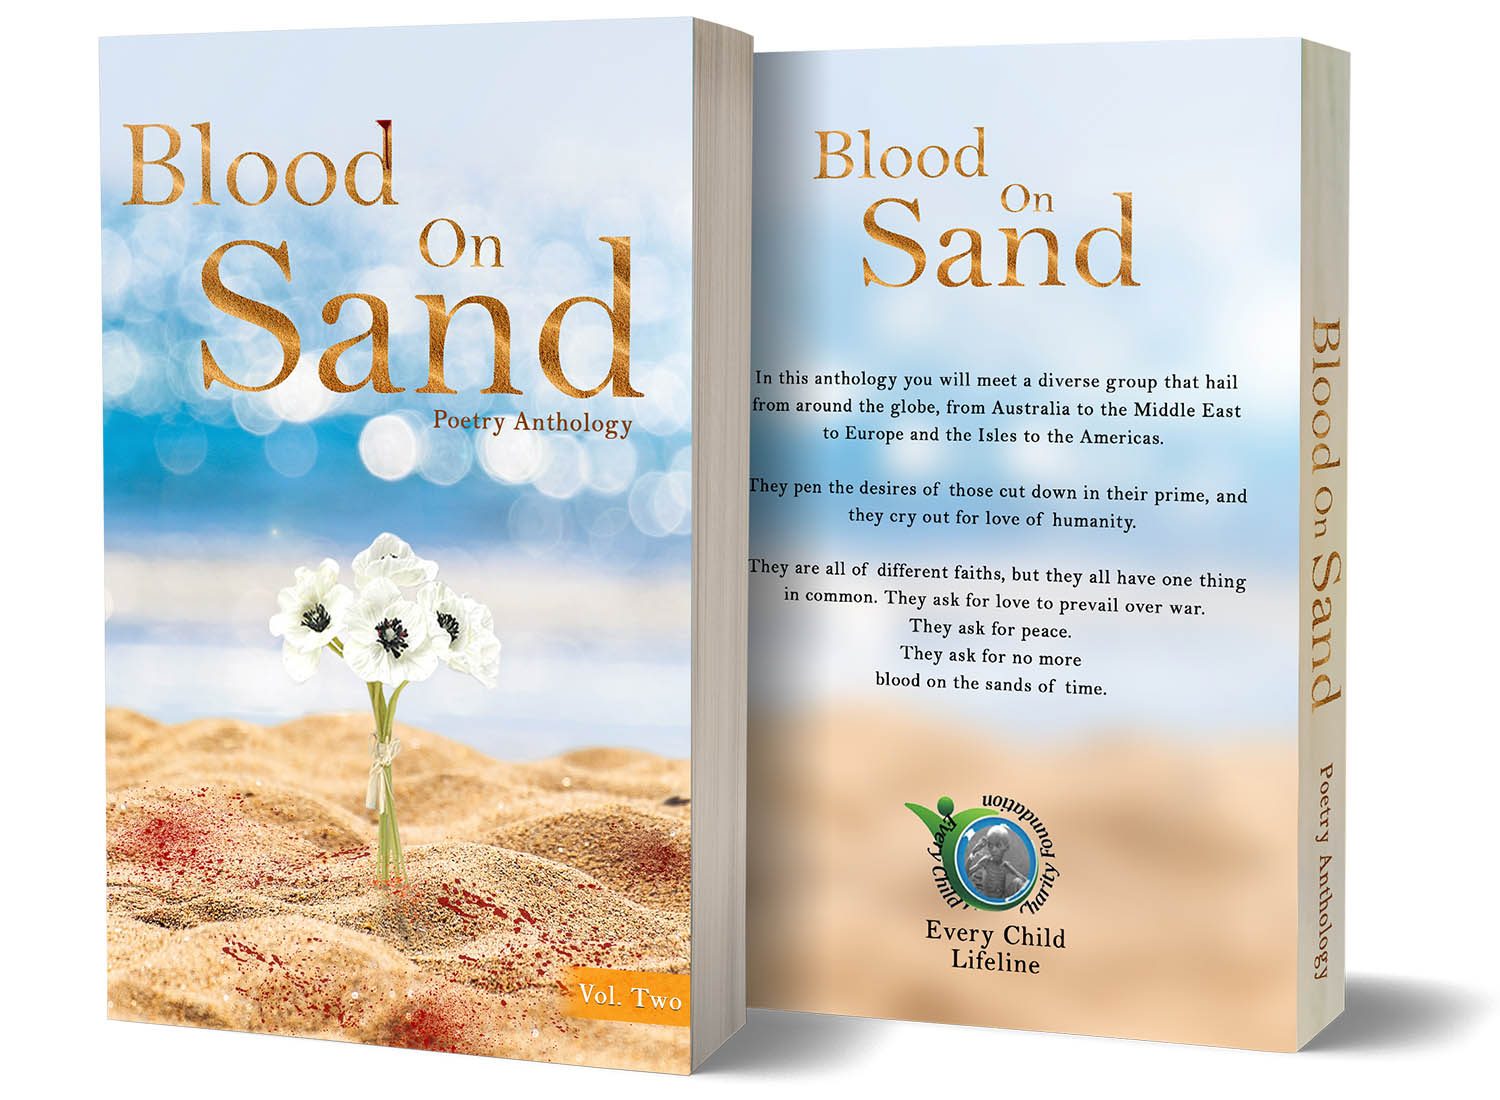 mrismailben-portfolio-Blood-on-sand-paperback-bookcoverdesign